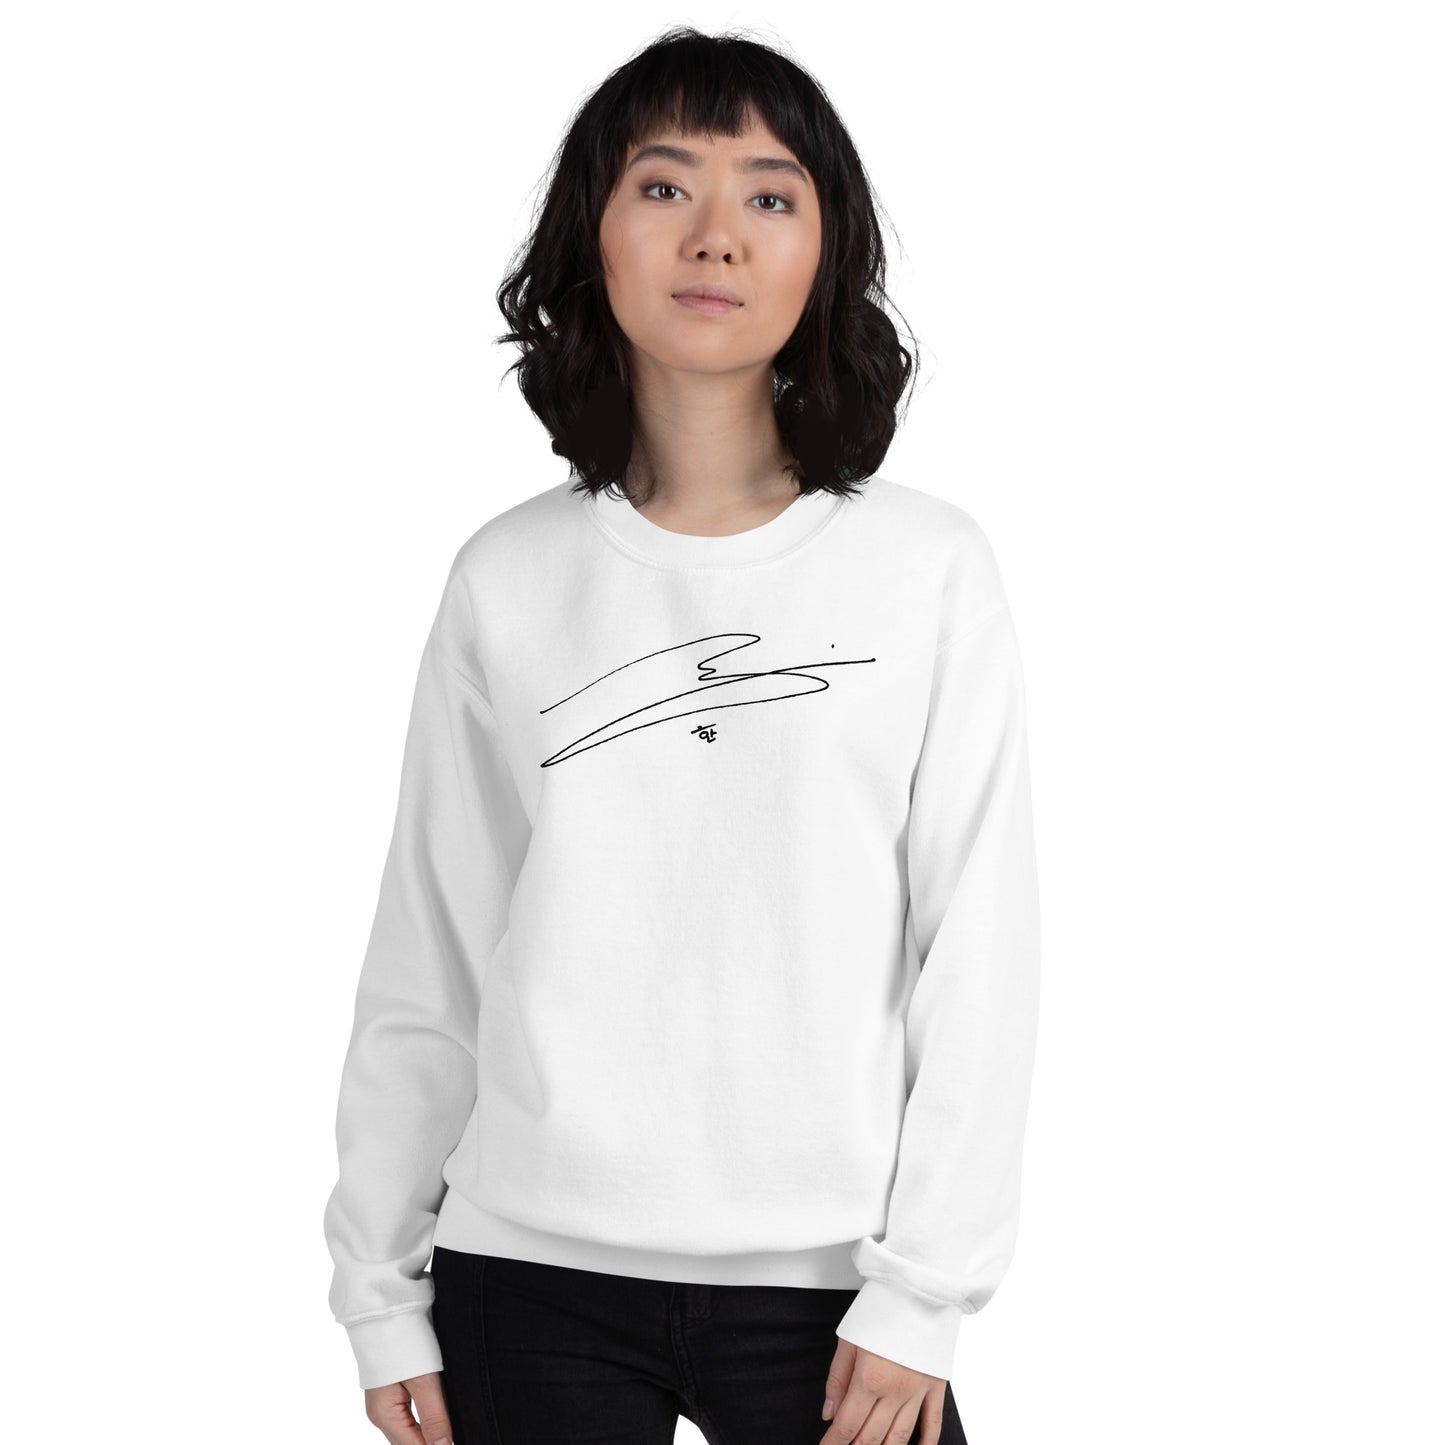 Stray Kids Han, Han Ji-sung Signature Unisex Sweatshirt